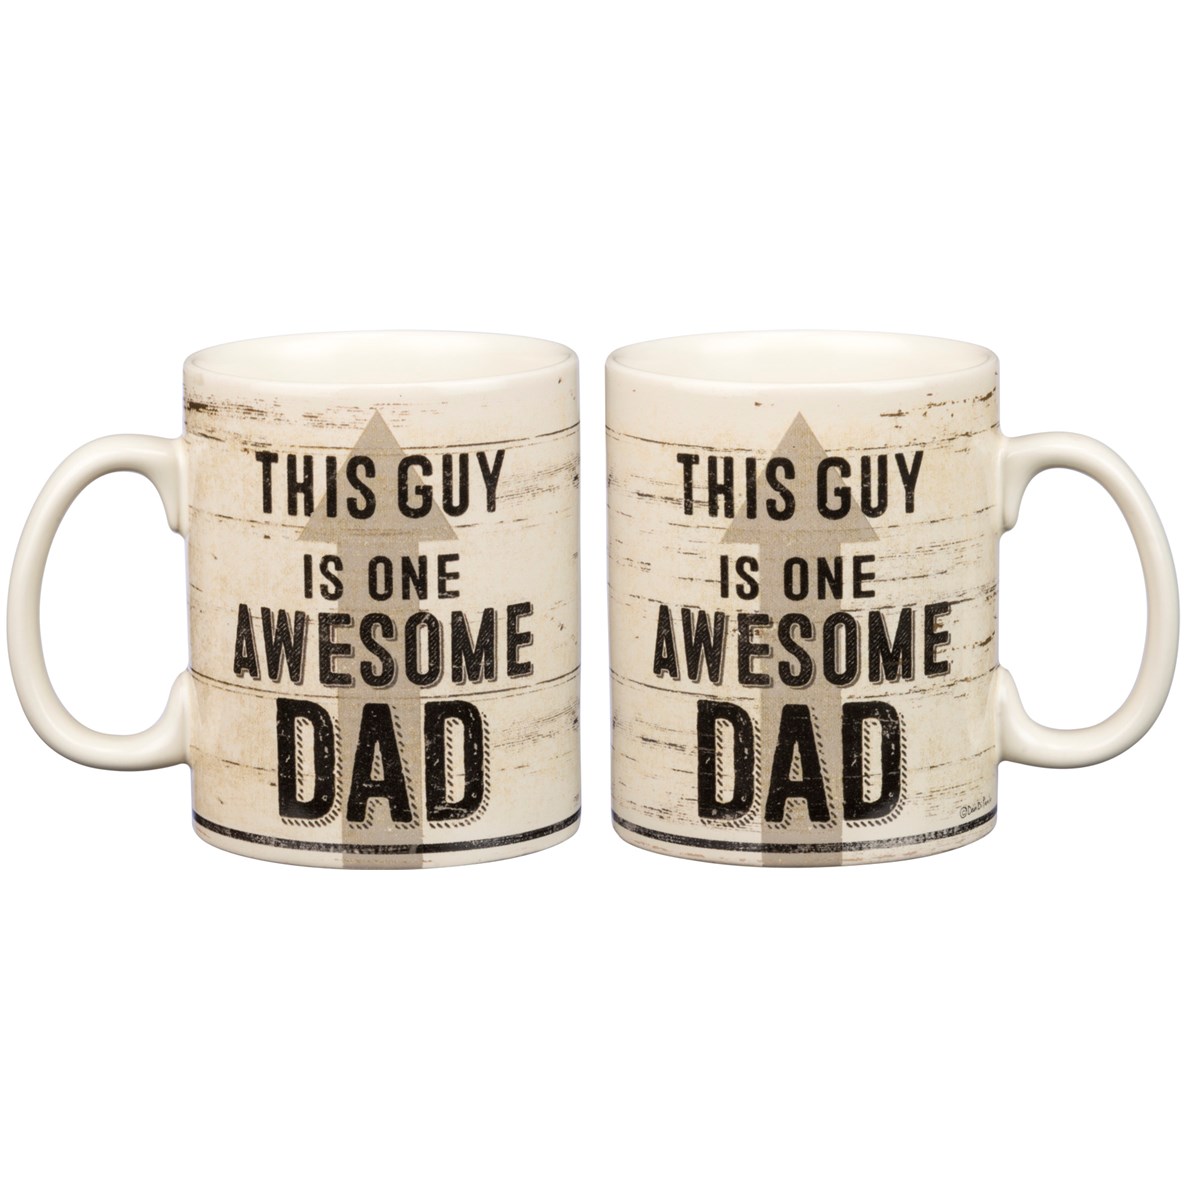 Mug - This Guy Is One Awesome Dad - 20 oz., 5.25" x 3.50" x 4.50" - Stoneware